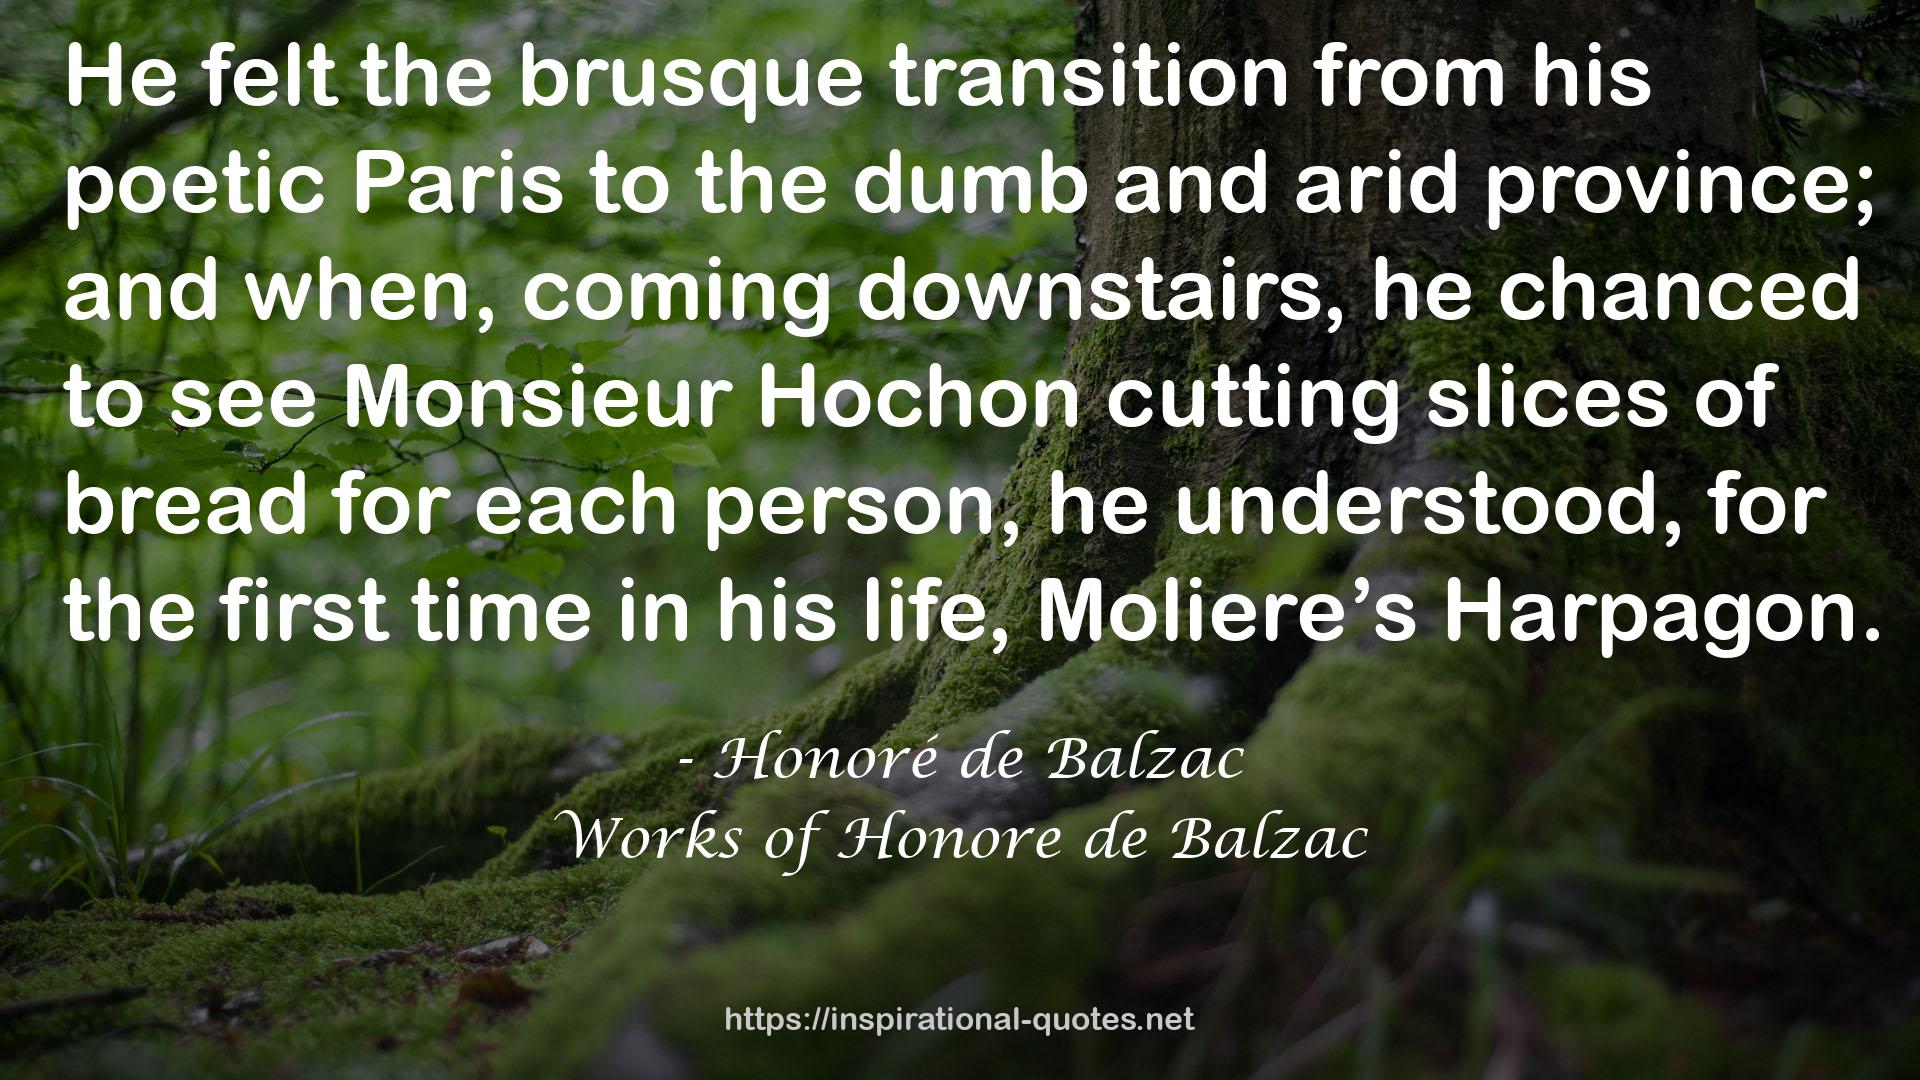 Works of Honore de Balzac QUOTES